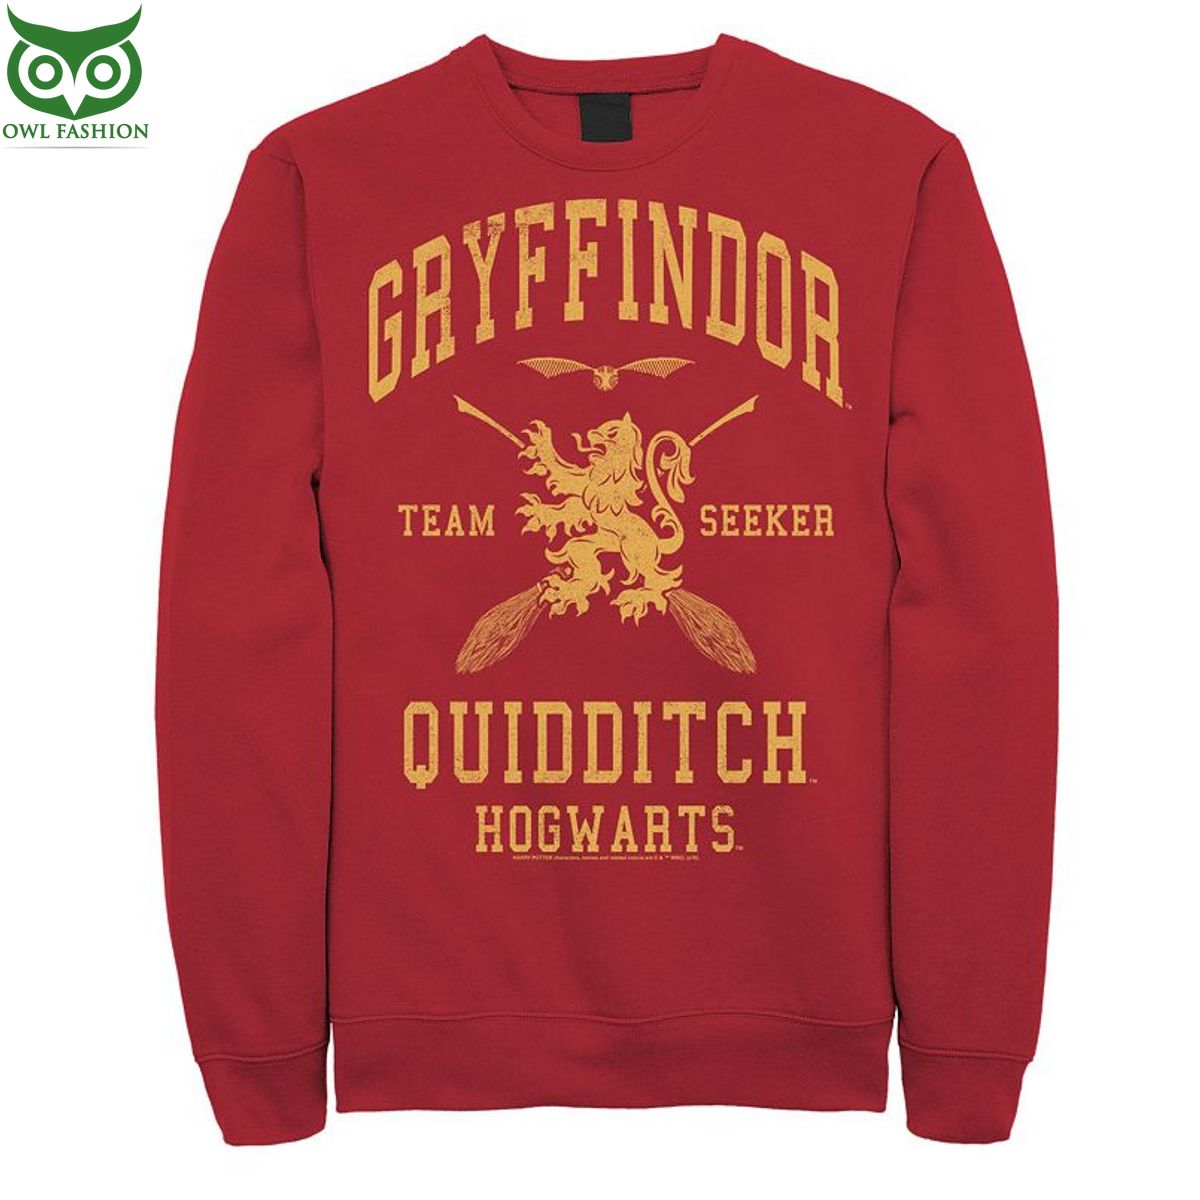 quidditch hogwarts team seeker gryffindor sweater harry potter shop owl fashion 1 cH5hd.jpg